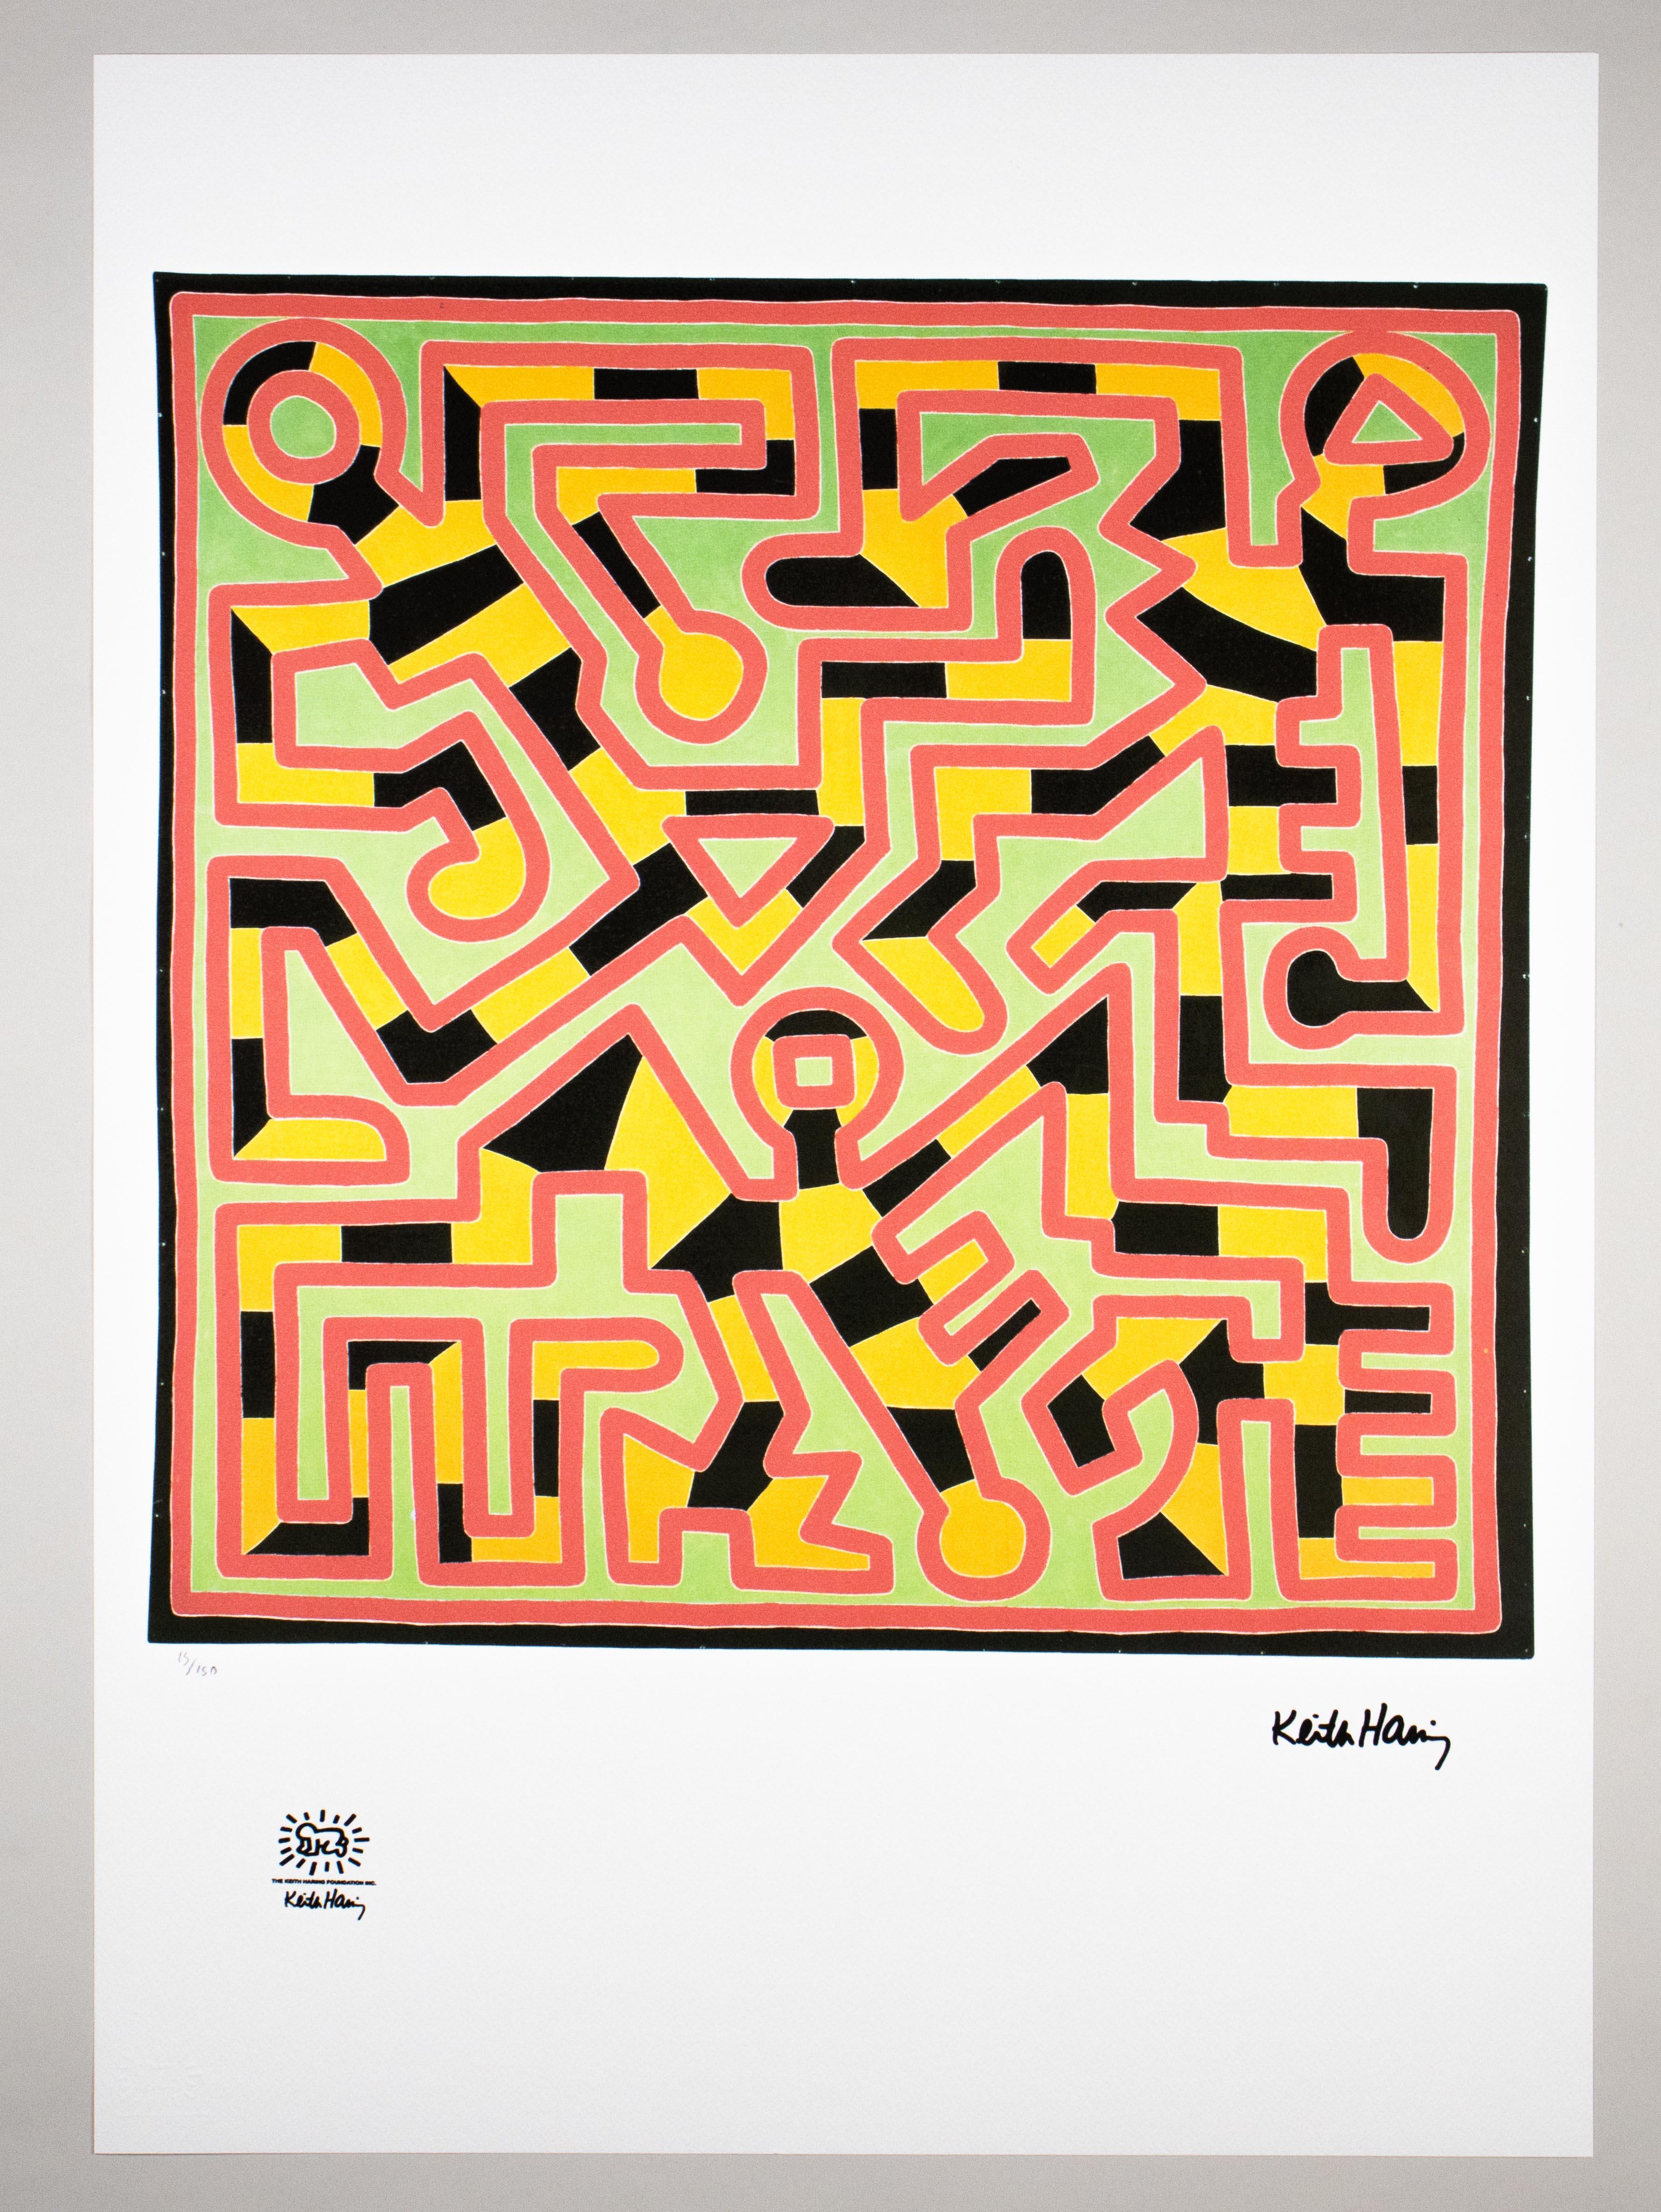 Lithographie – limitierte Auflage 15/150 Exemplare – Keith Haring Foundation Inc. im Angebot 1